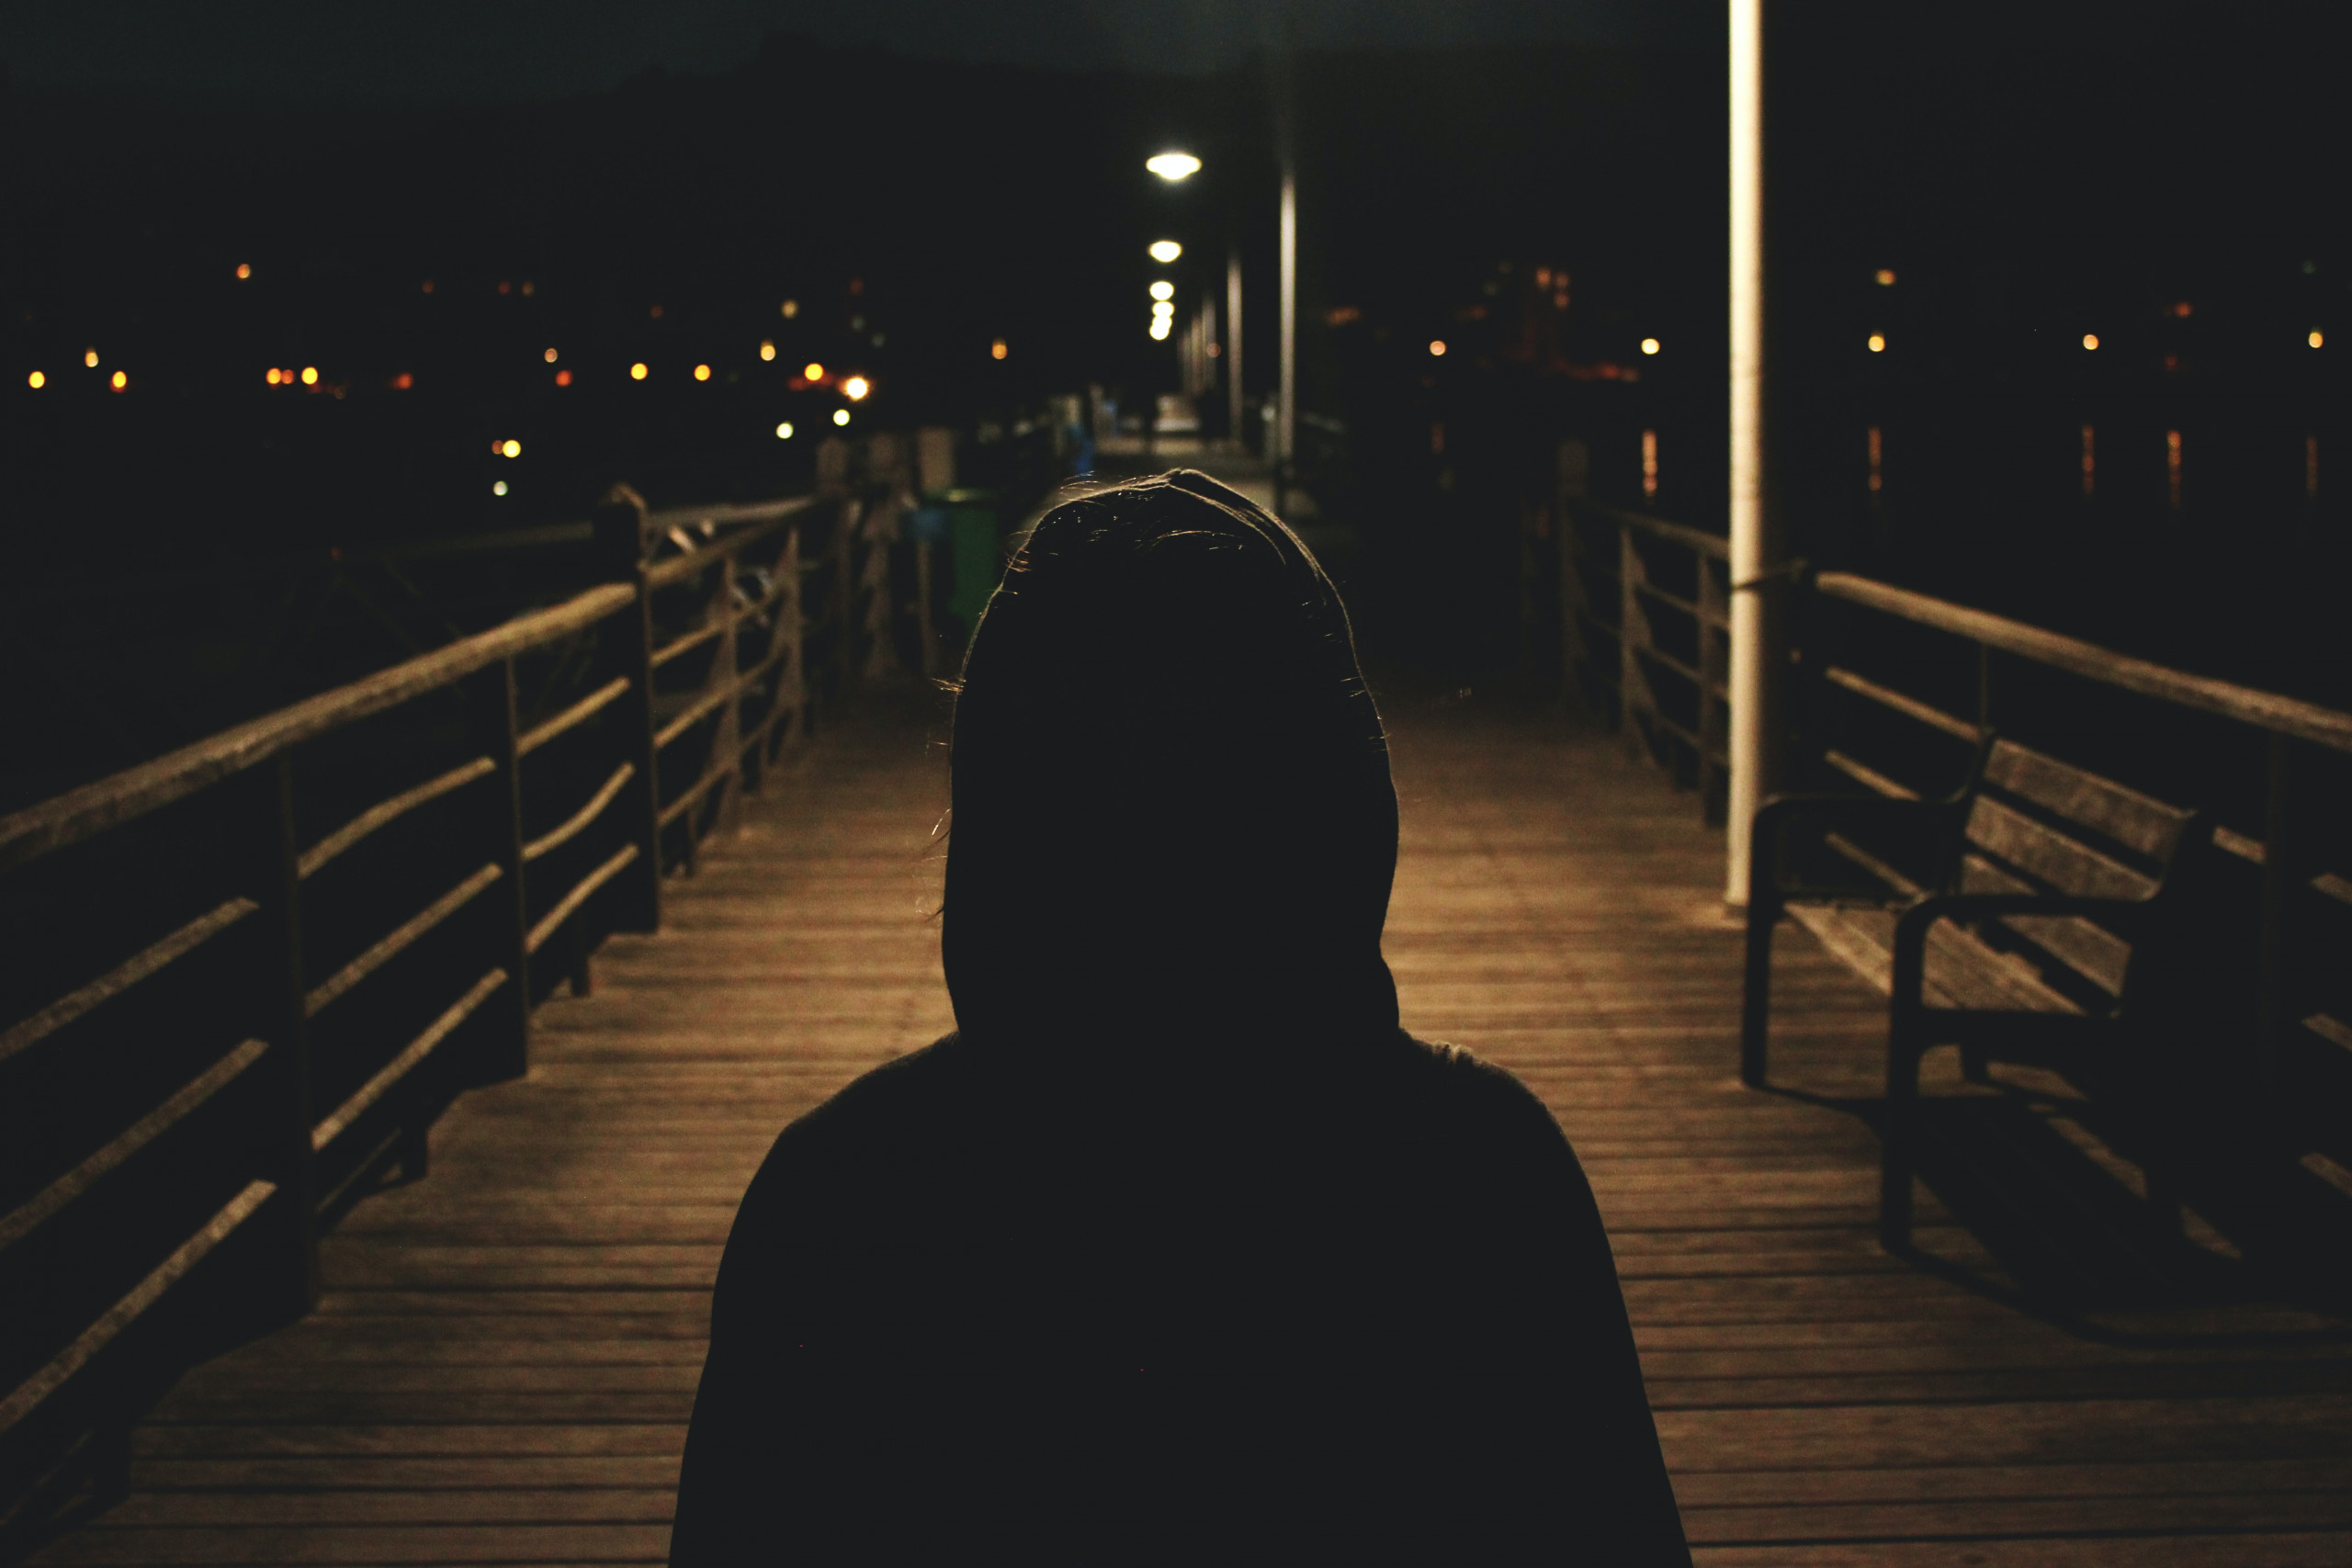 stranger danger - person wearing hooded jacket walking in bridge